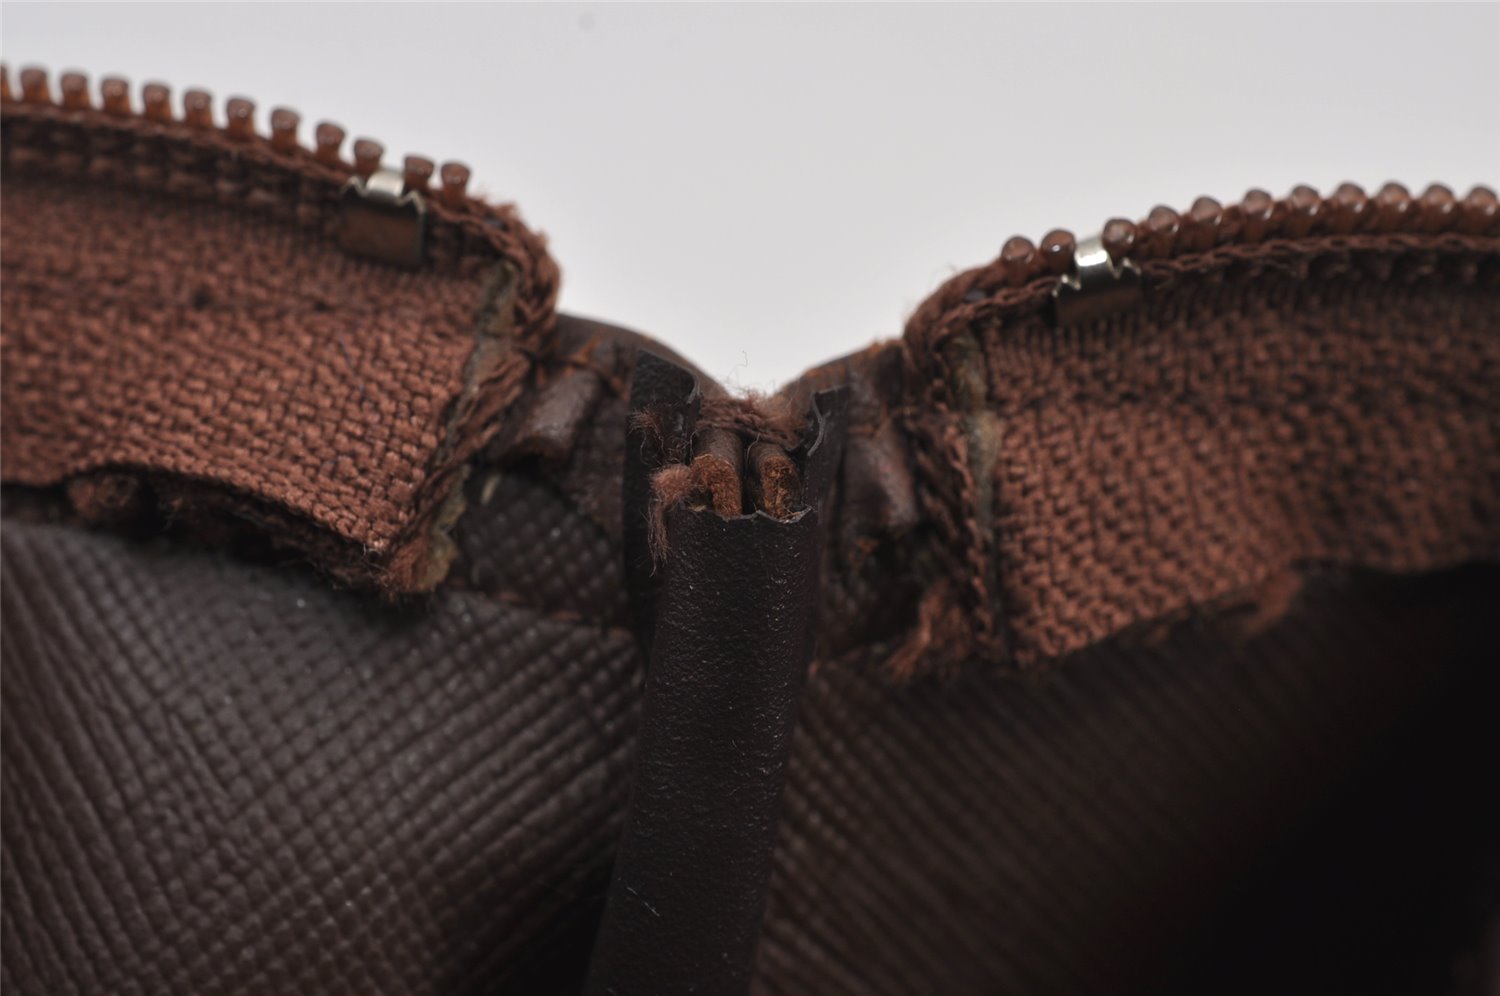 Authentic Burberrys Check Canvas Leather Clutch Hand Bag Purse Khaki Green 8148J